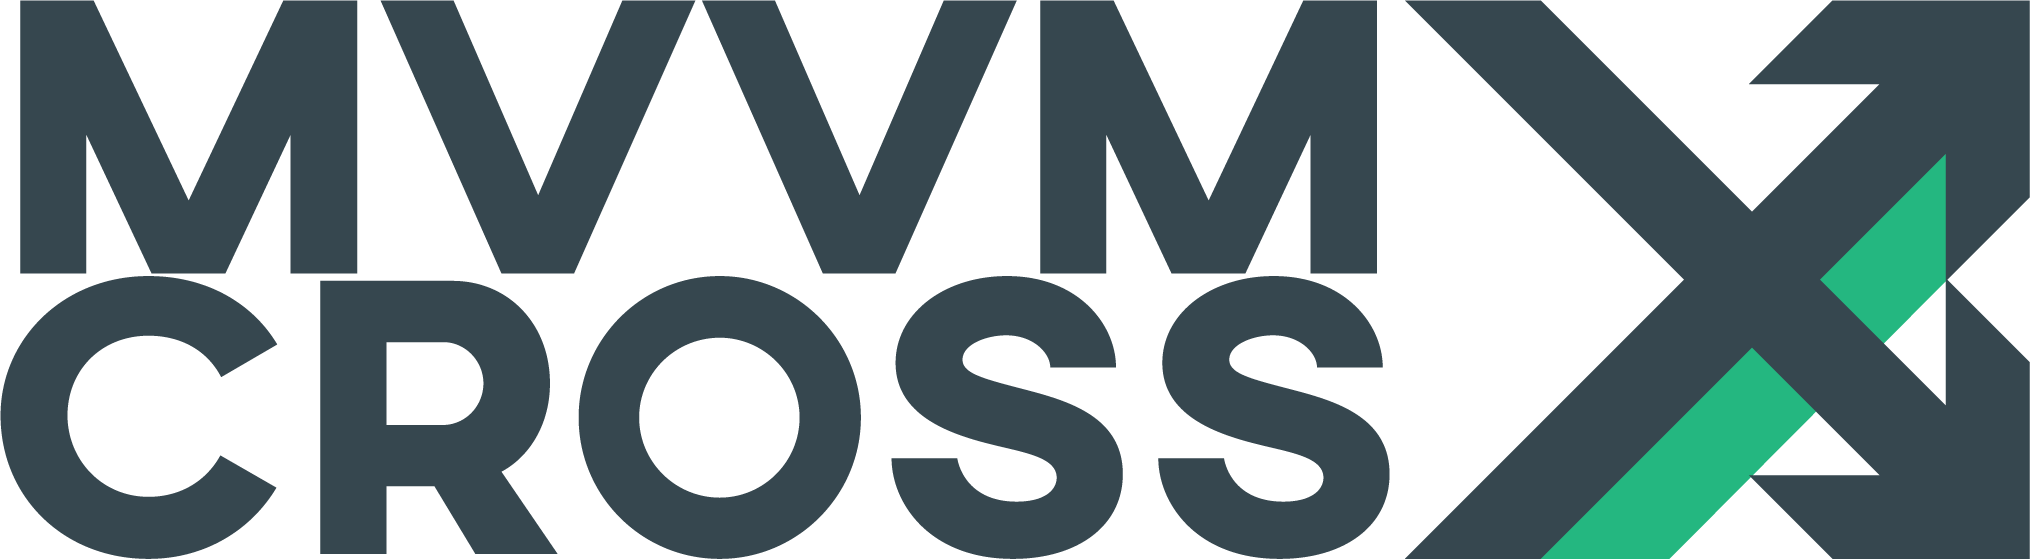 MvvmCross